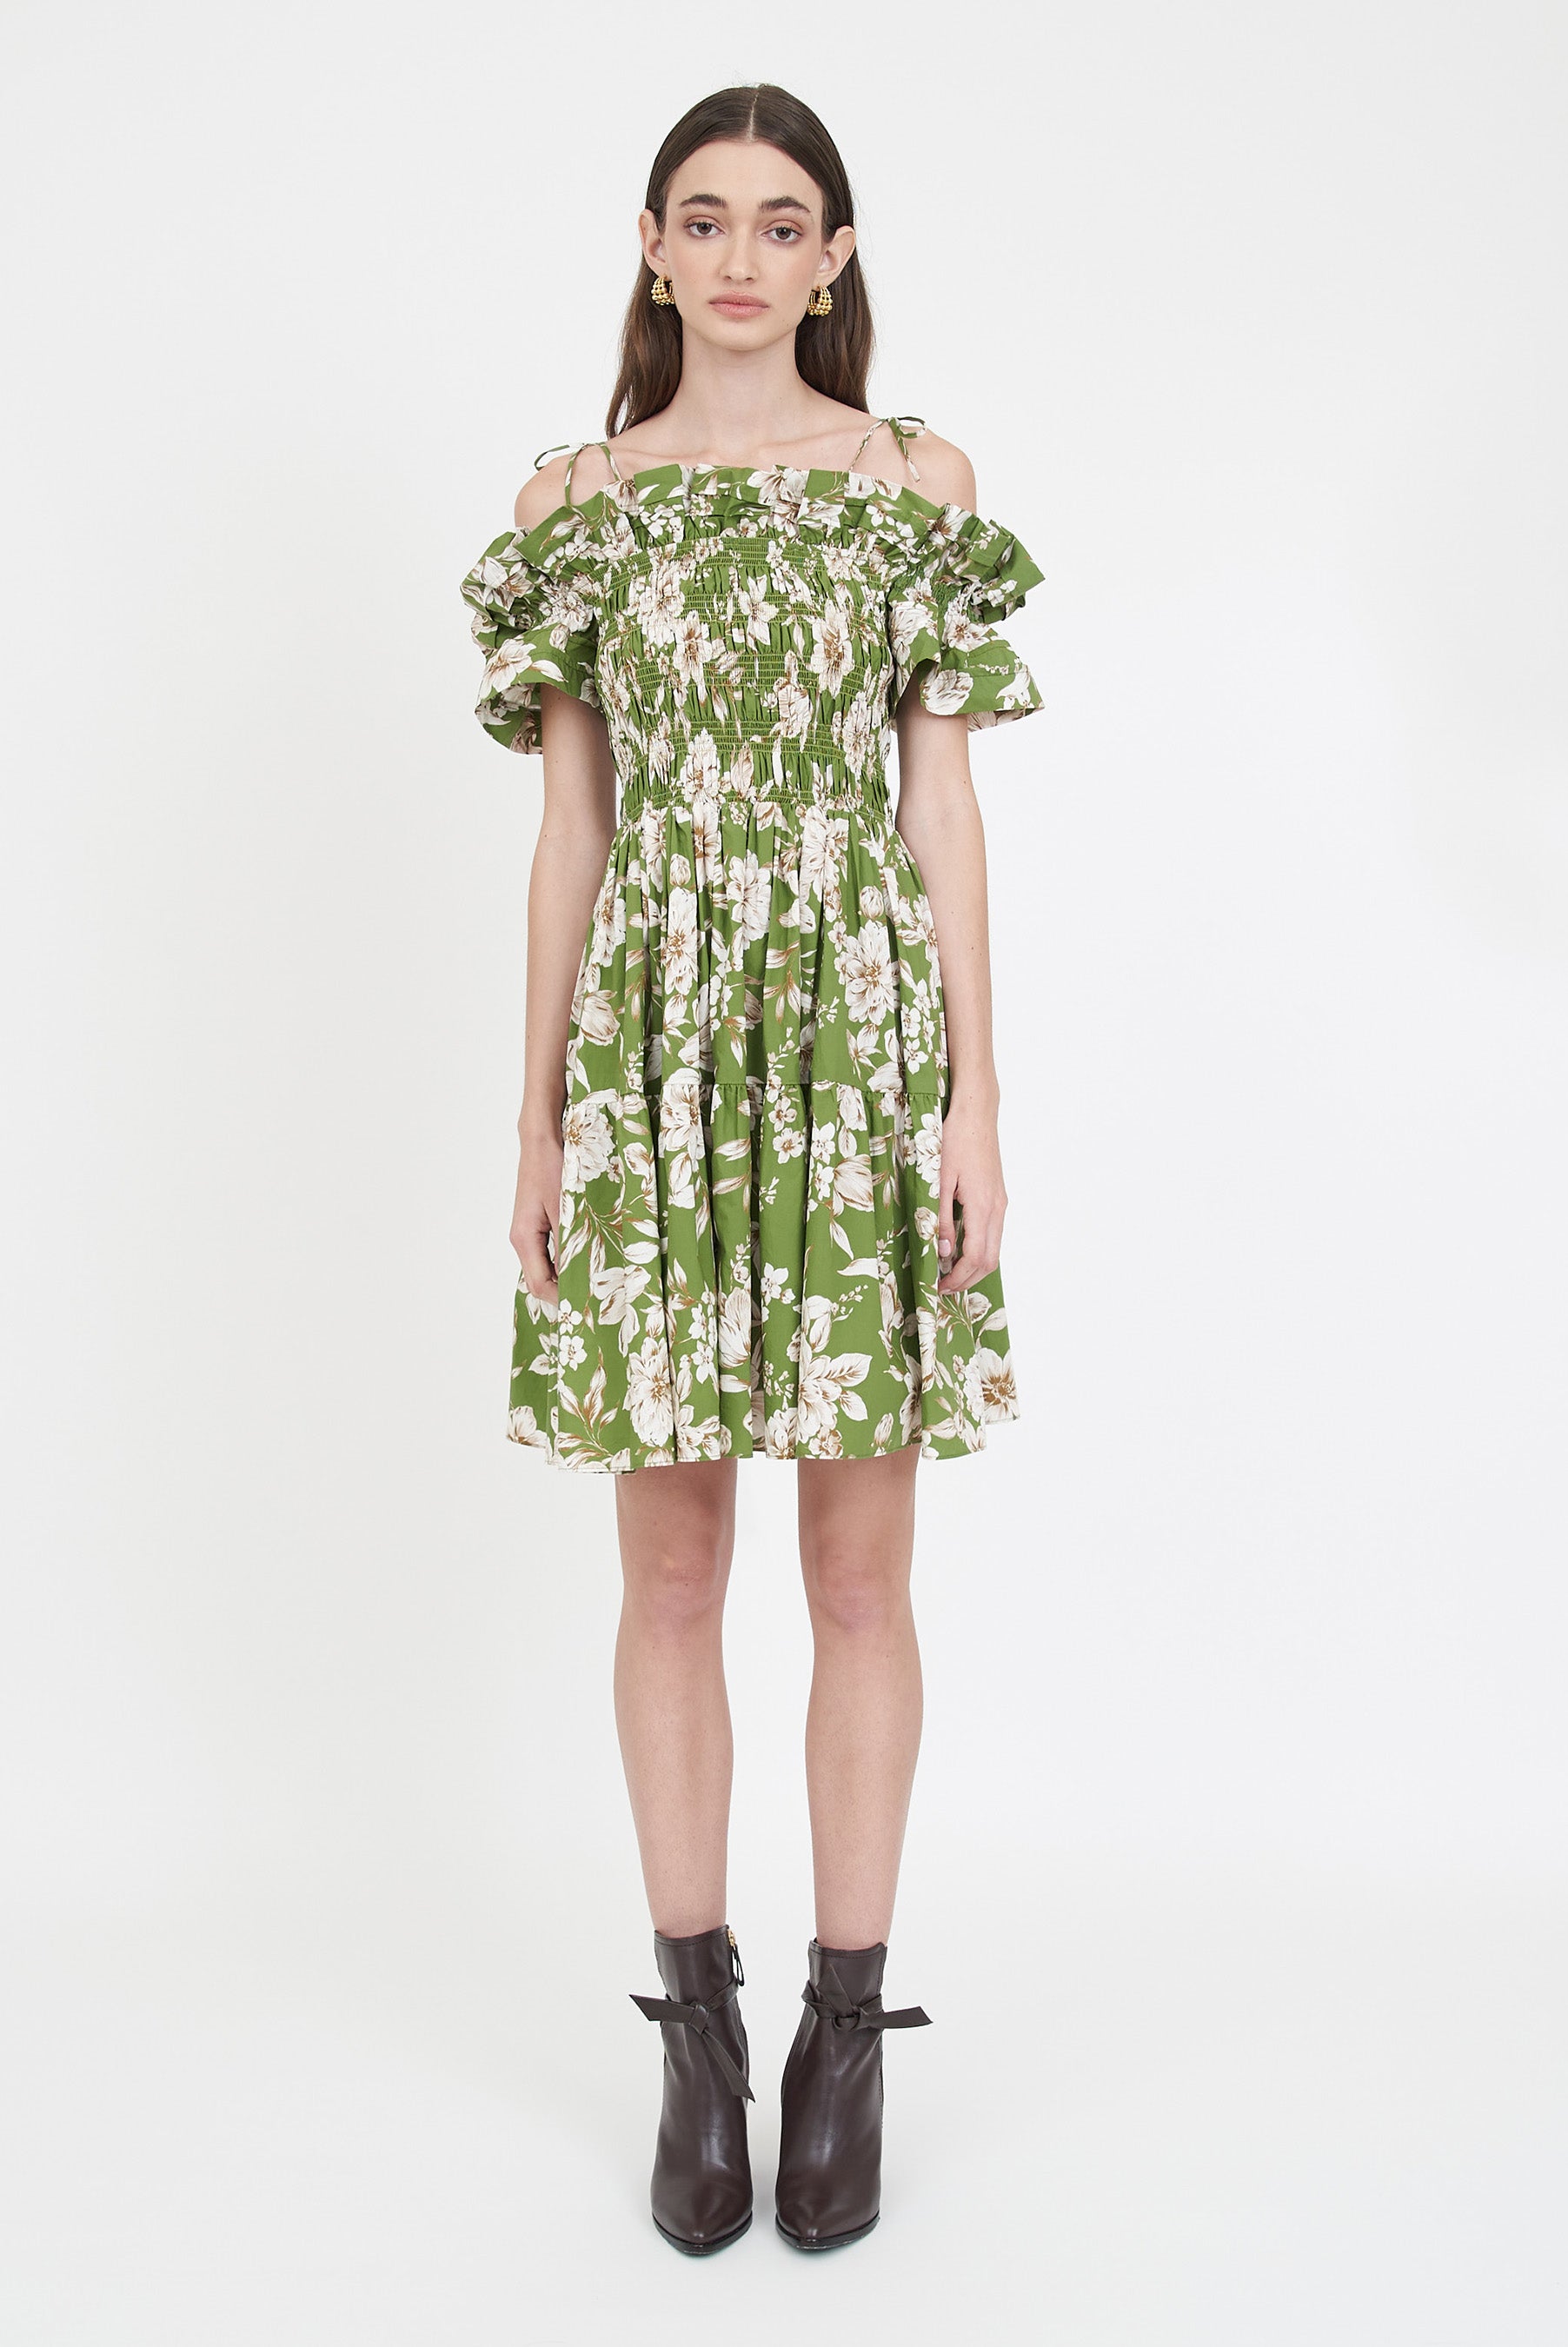 Carlotta Dress - Green Magnolia